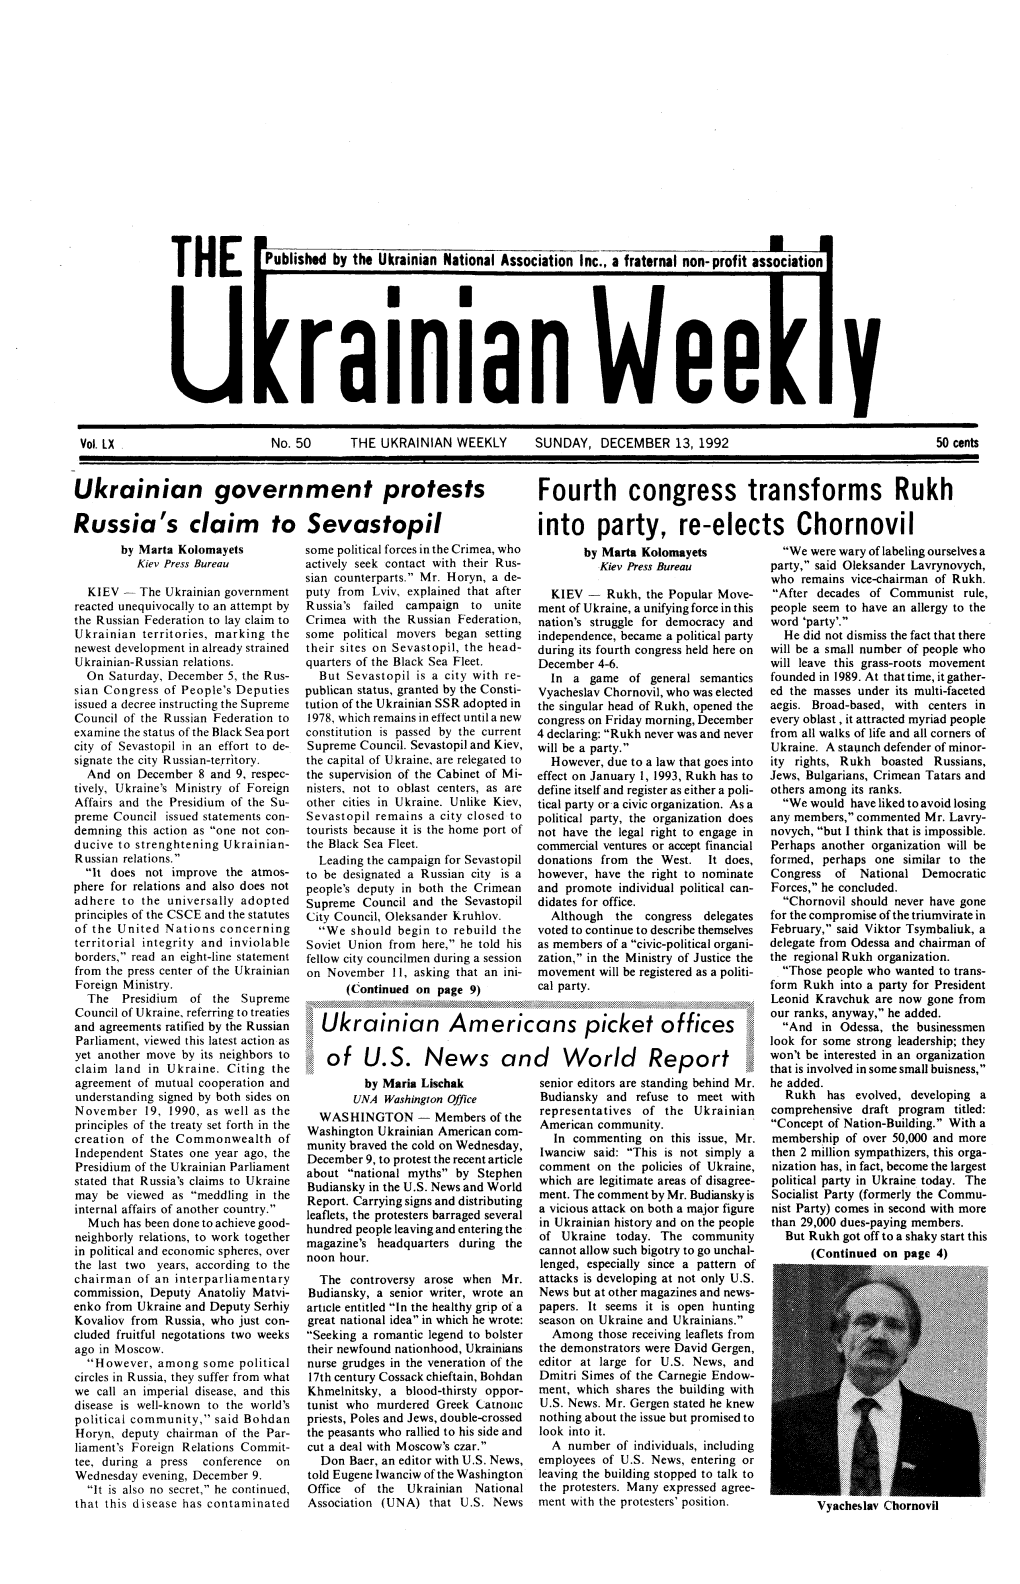 The Ukrainian Weekly 1992, No.50